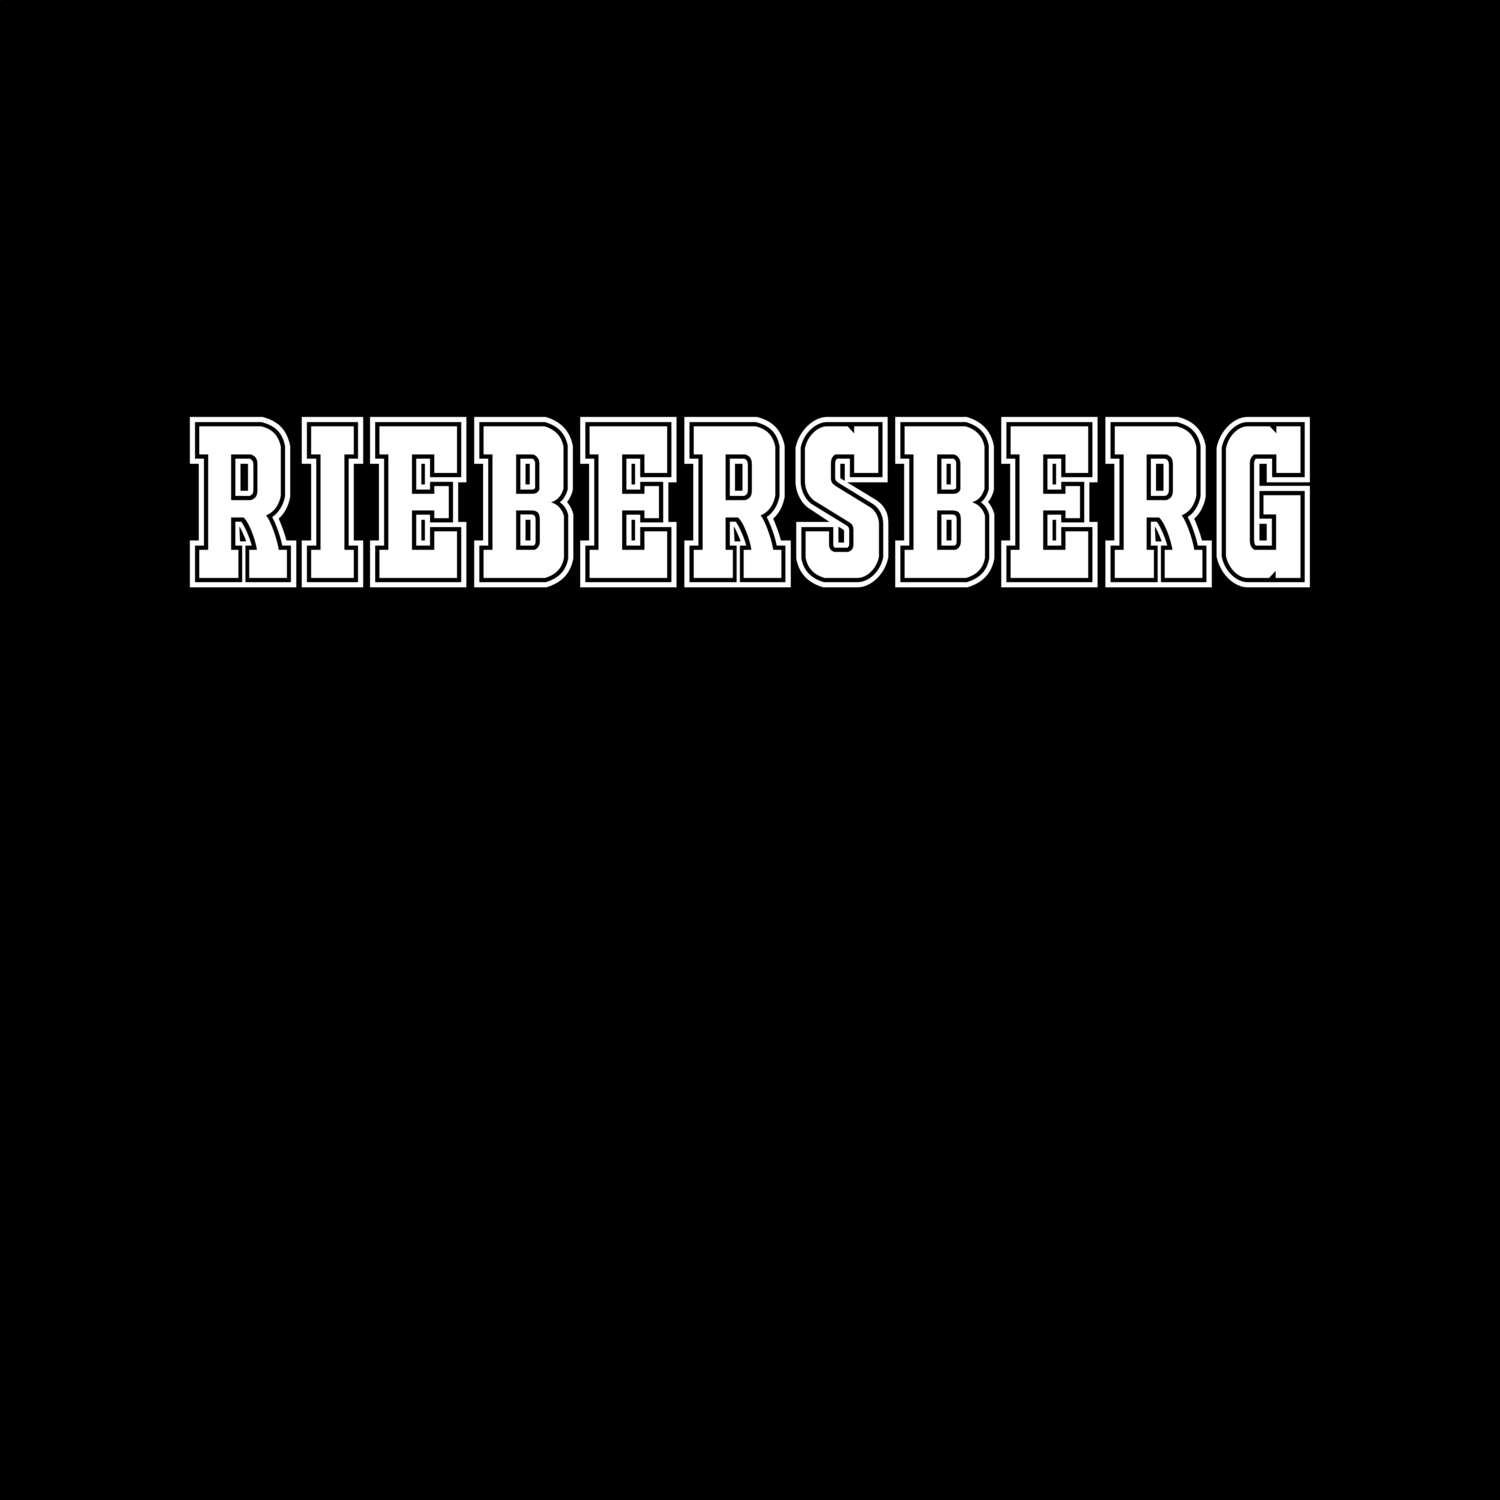 Riebersberg T-Shirt »Classic«